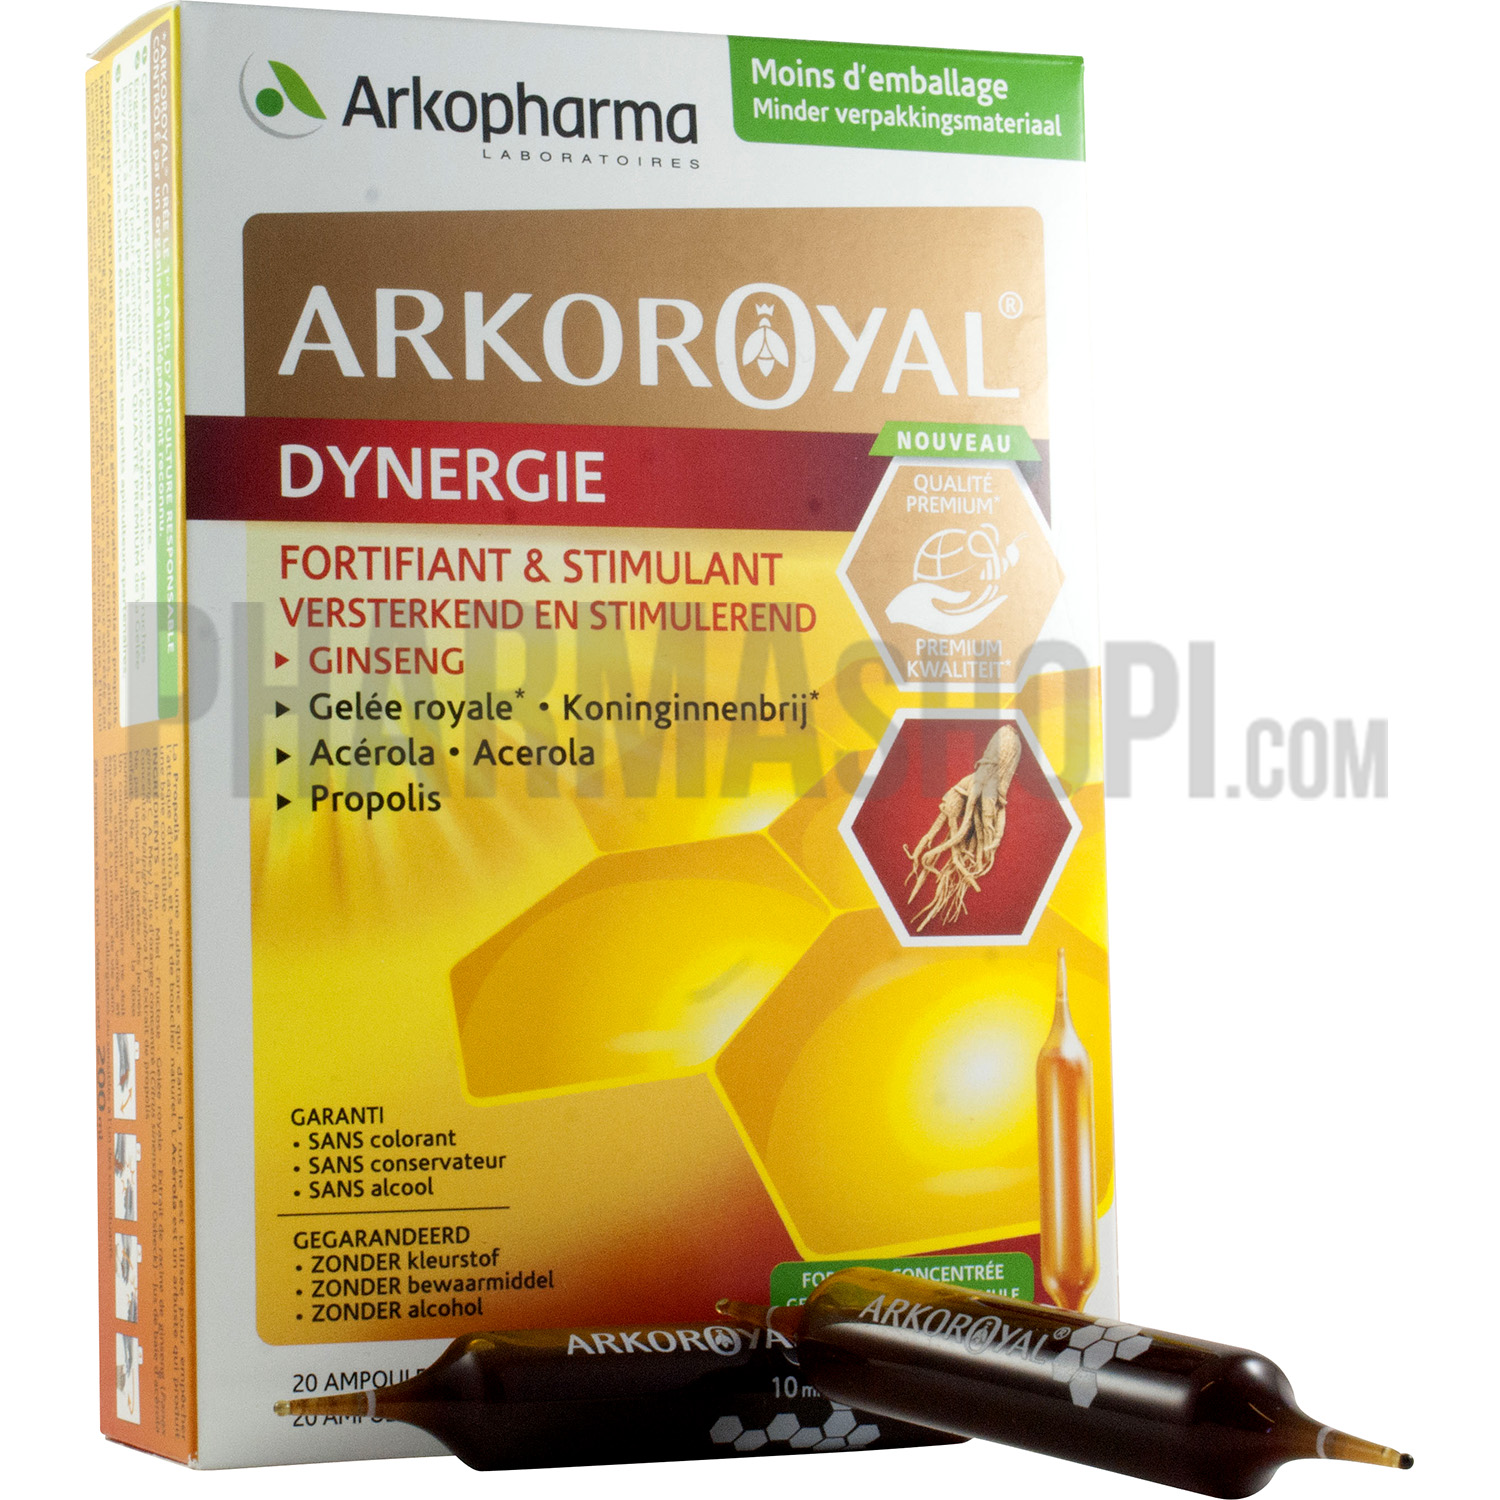 Arkoroyal Dynergie fortifiant & stimulant Arkopharma - Boite de 20 ampoules